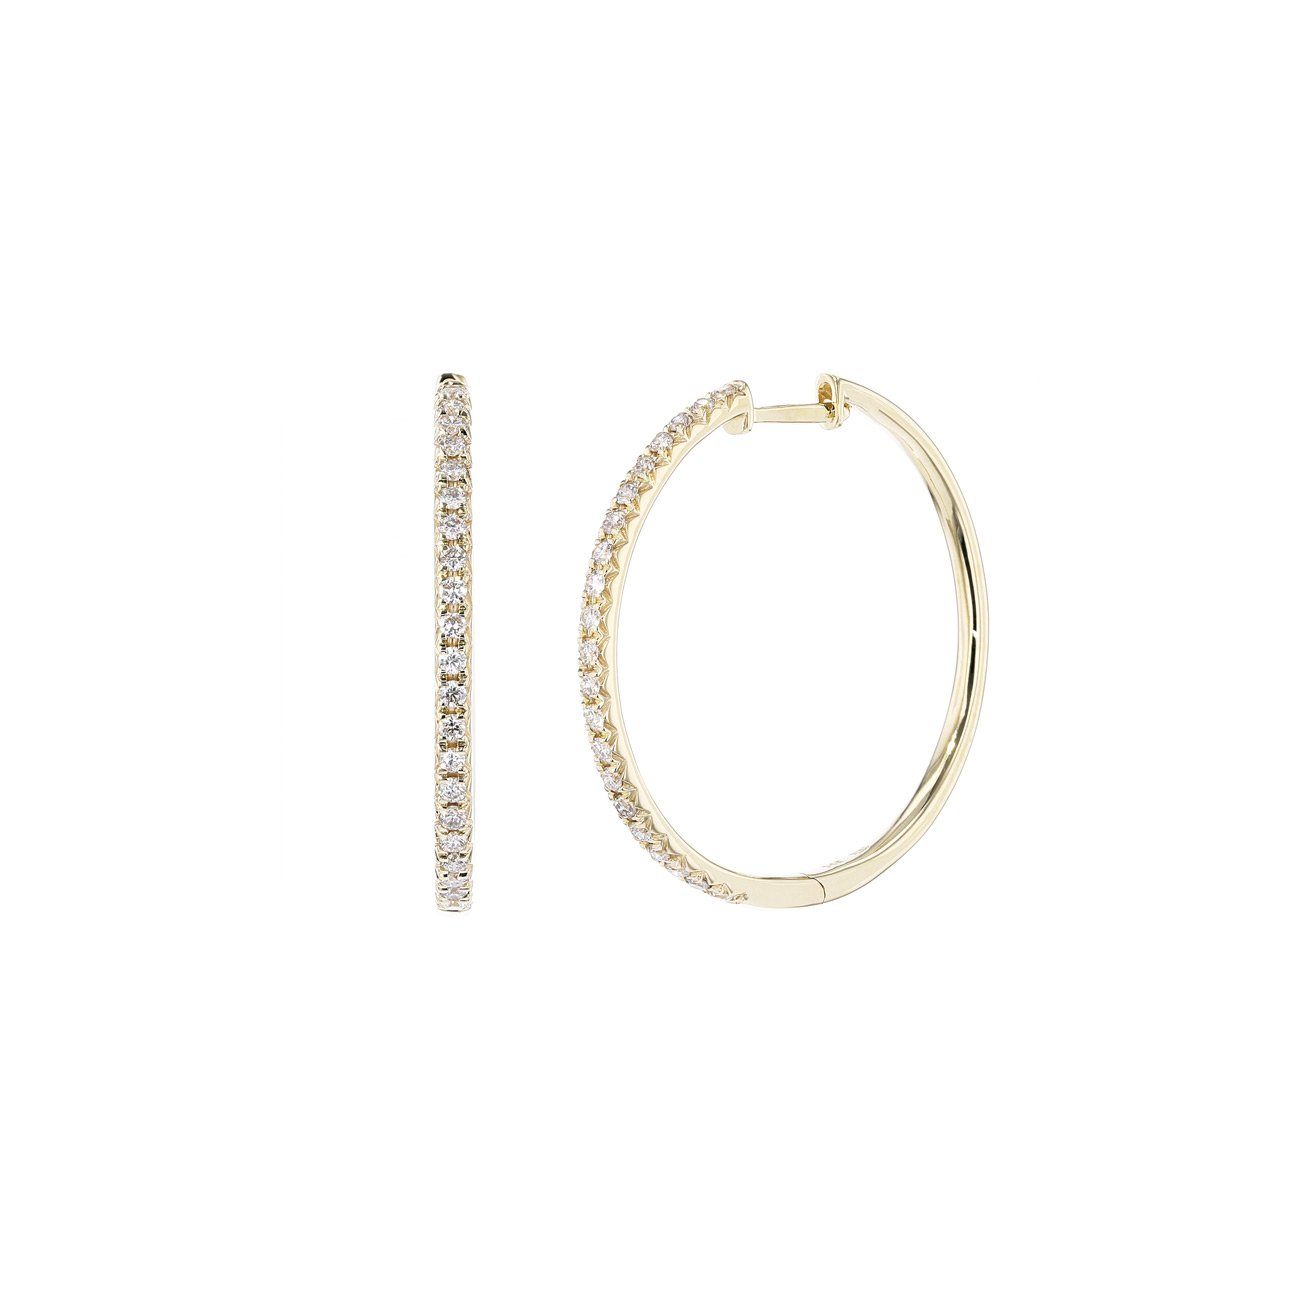 Large Pavé Diamond Hoops Fine Jewelry Earrings Princess Bride Diamonds 14K Yellow Gold 